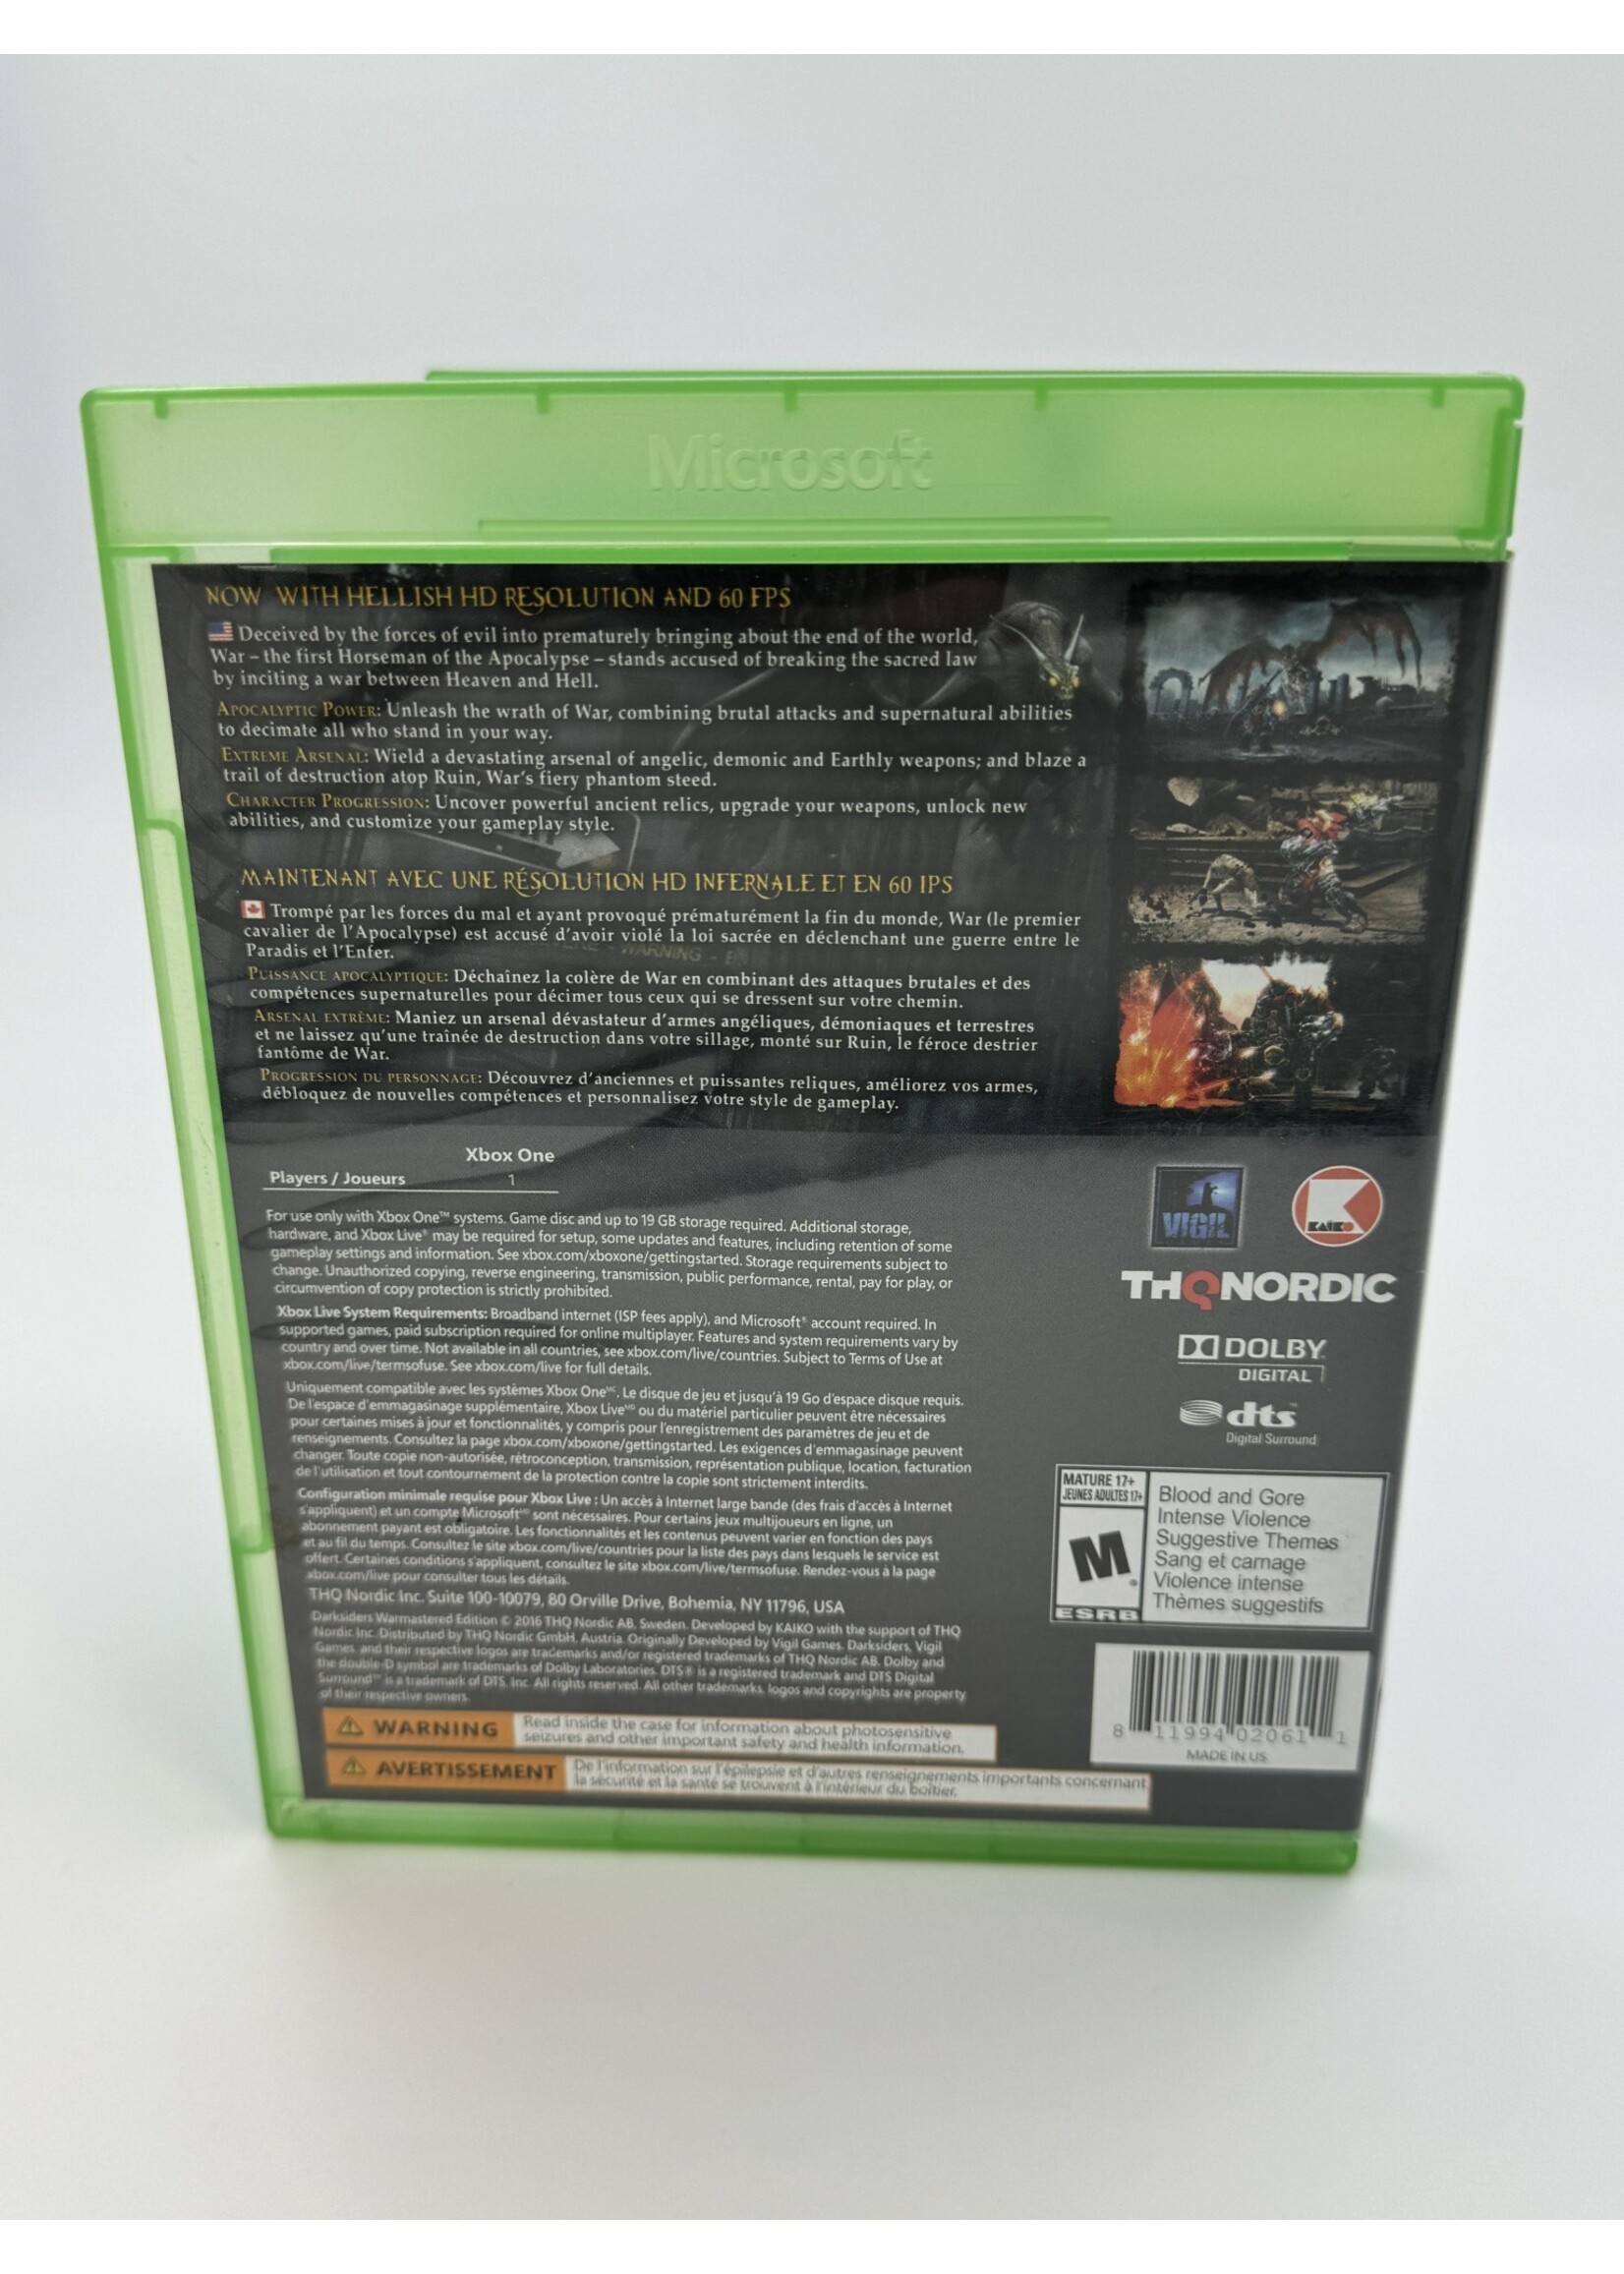 Xbox Darksiders Warmastered Edition Xbox One